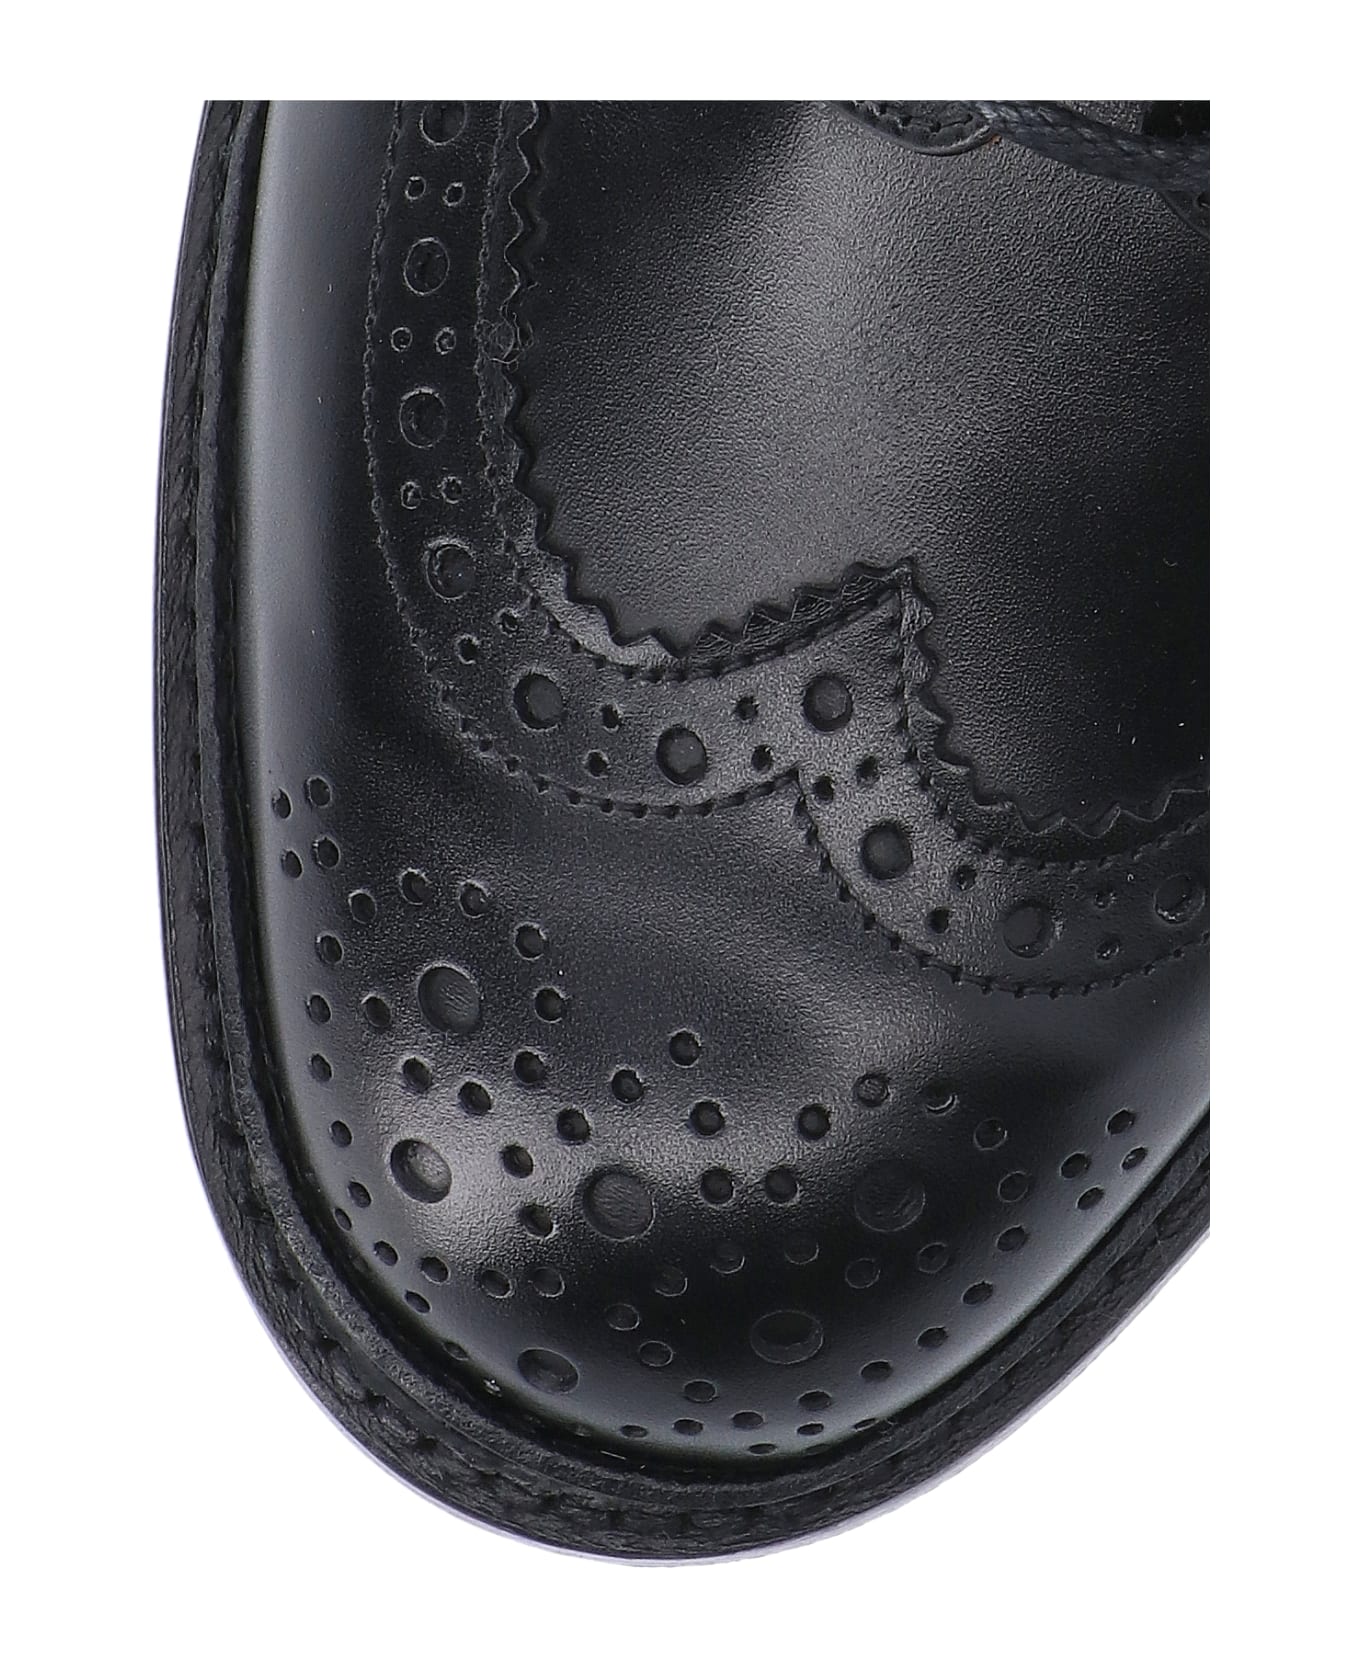 Tricker's 'bourton' Derby Shoes - Black  